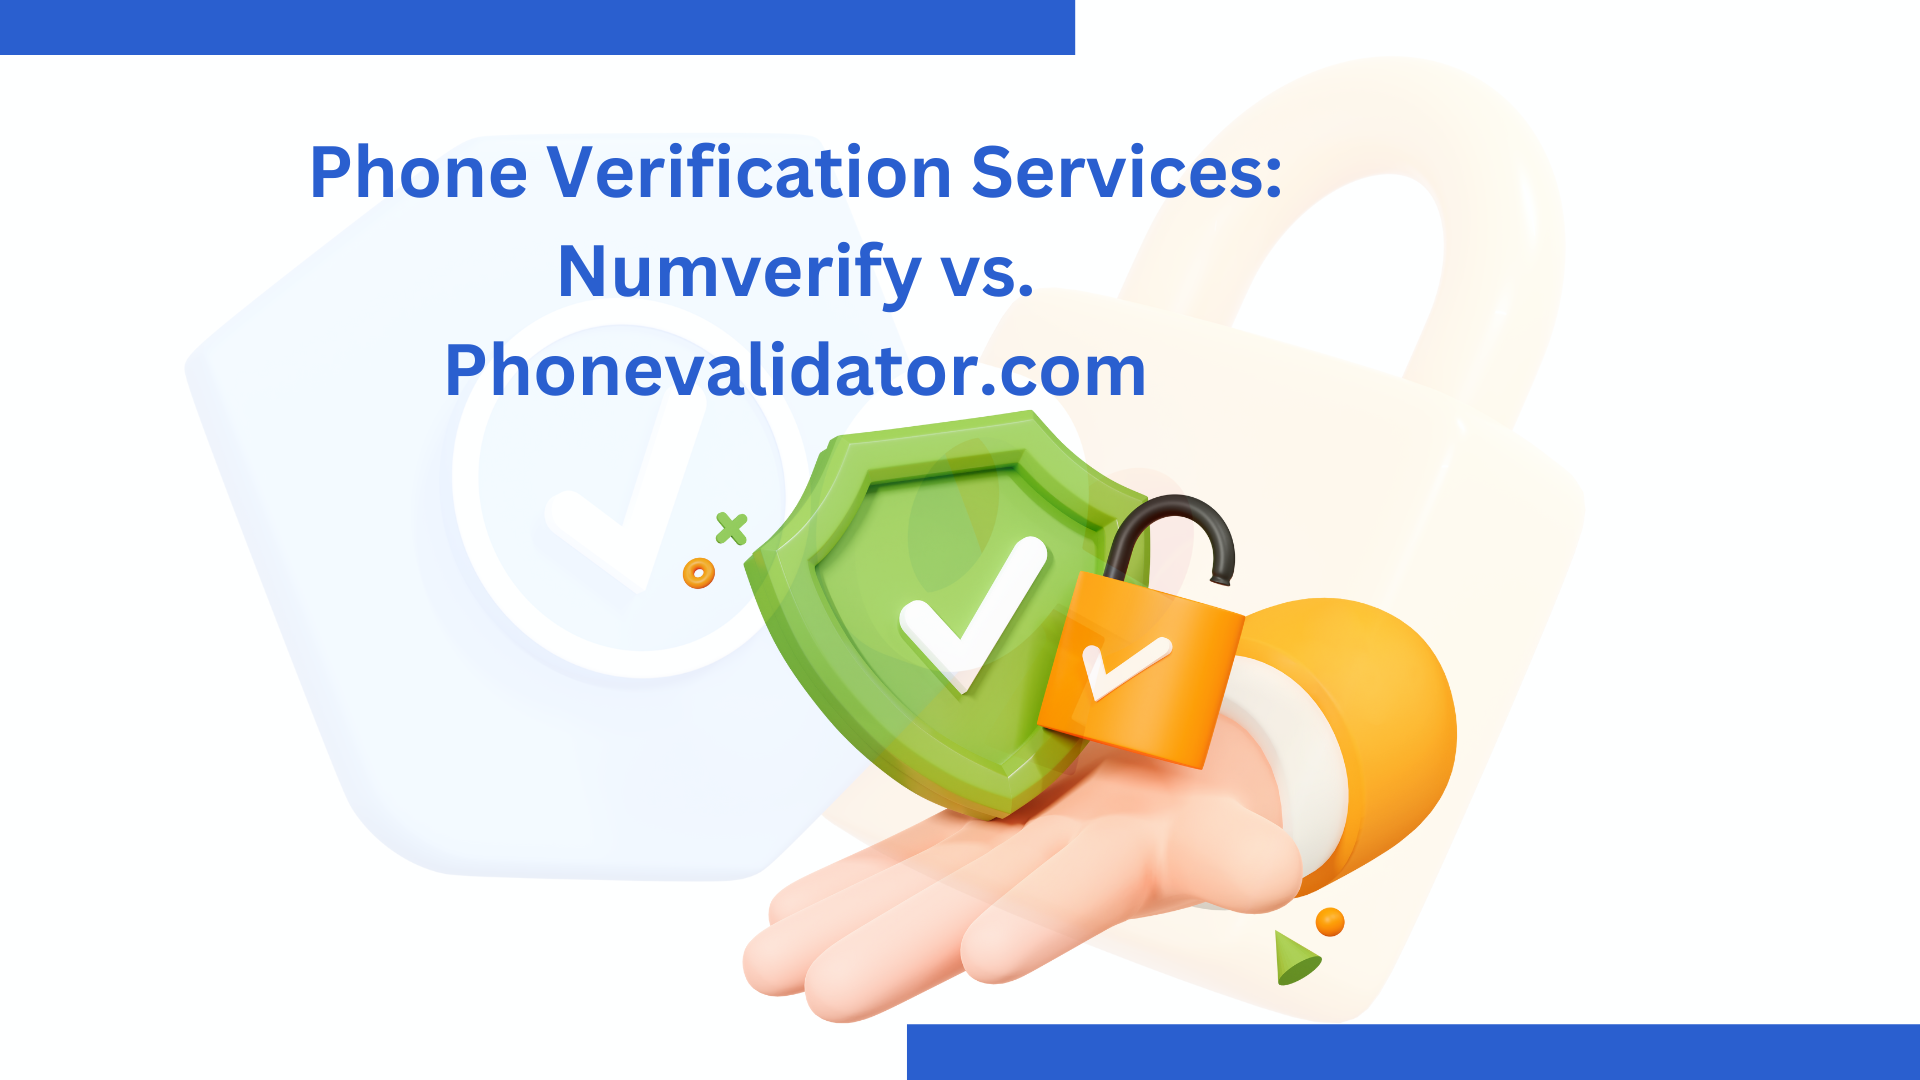 Phone Verification Services: Numverify vs. Phonevalidator.com